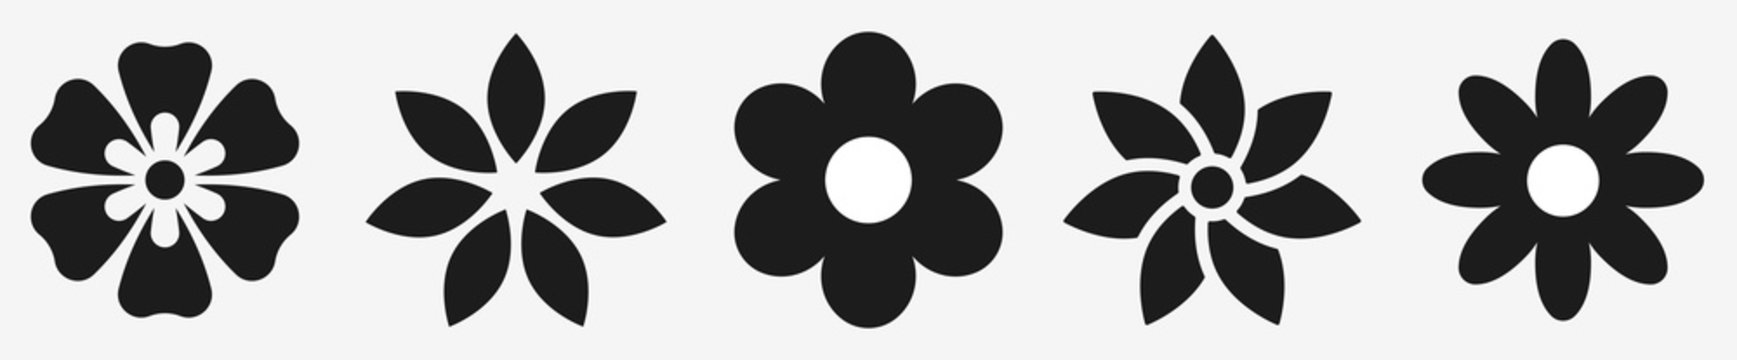 Naklejki Flower icons set isolated on white background. Flower simple icon. Vector illustration